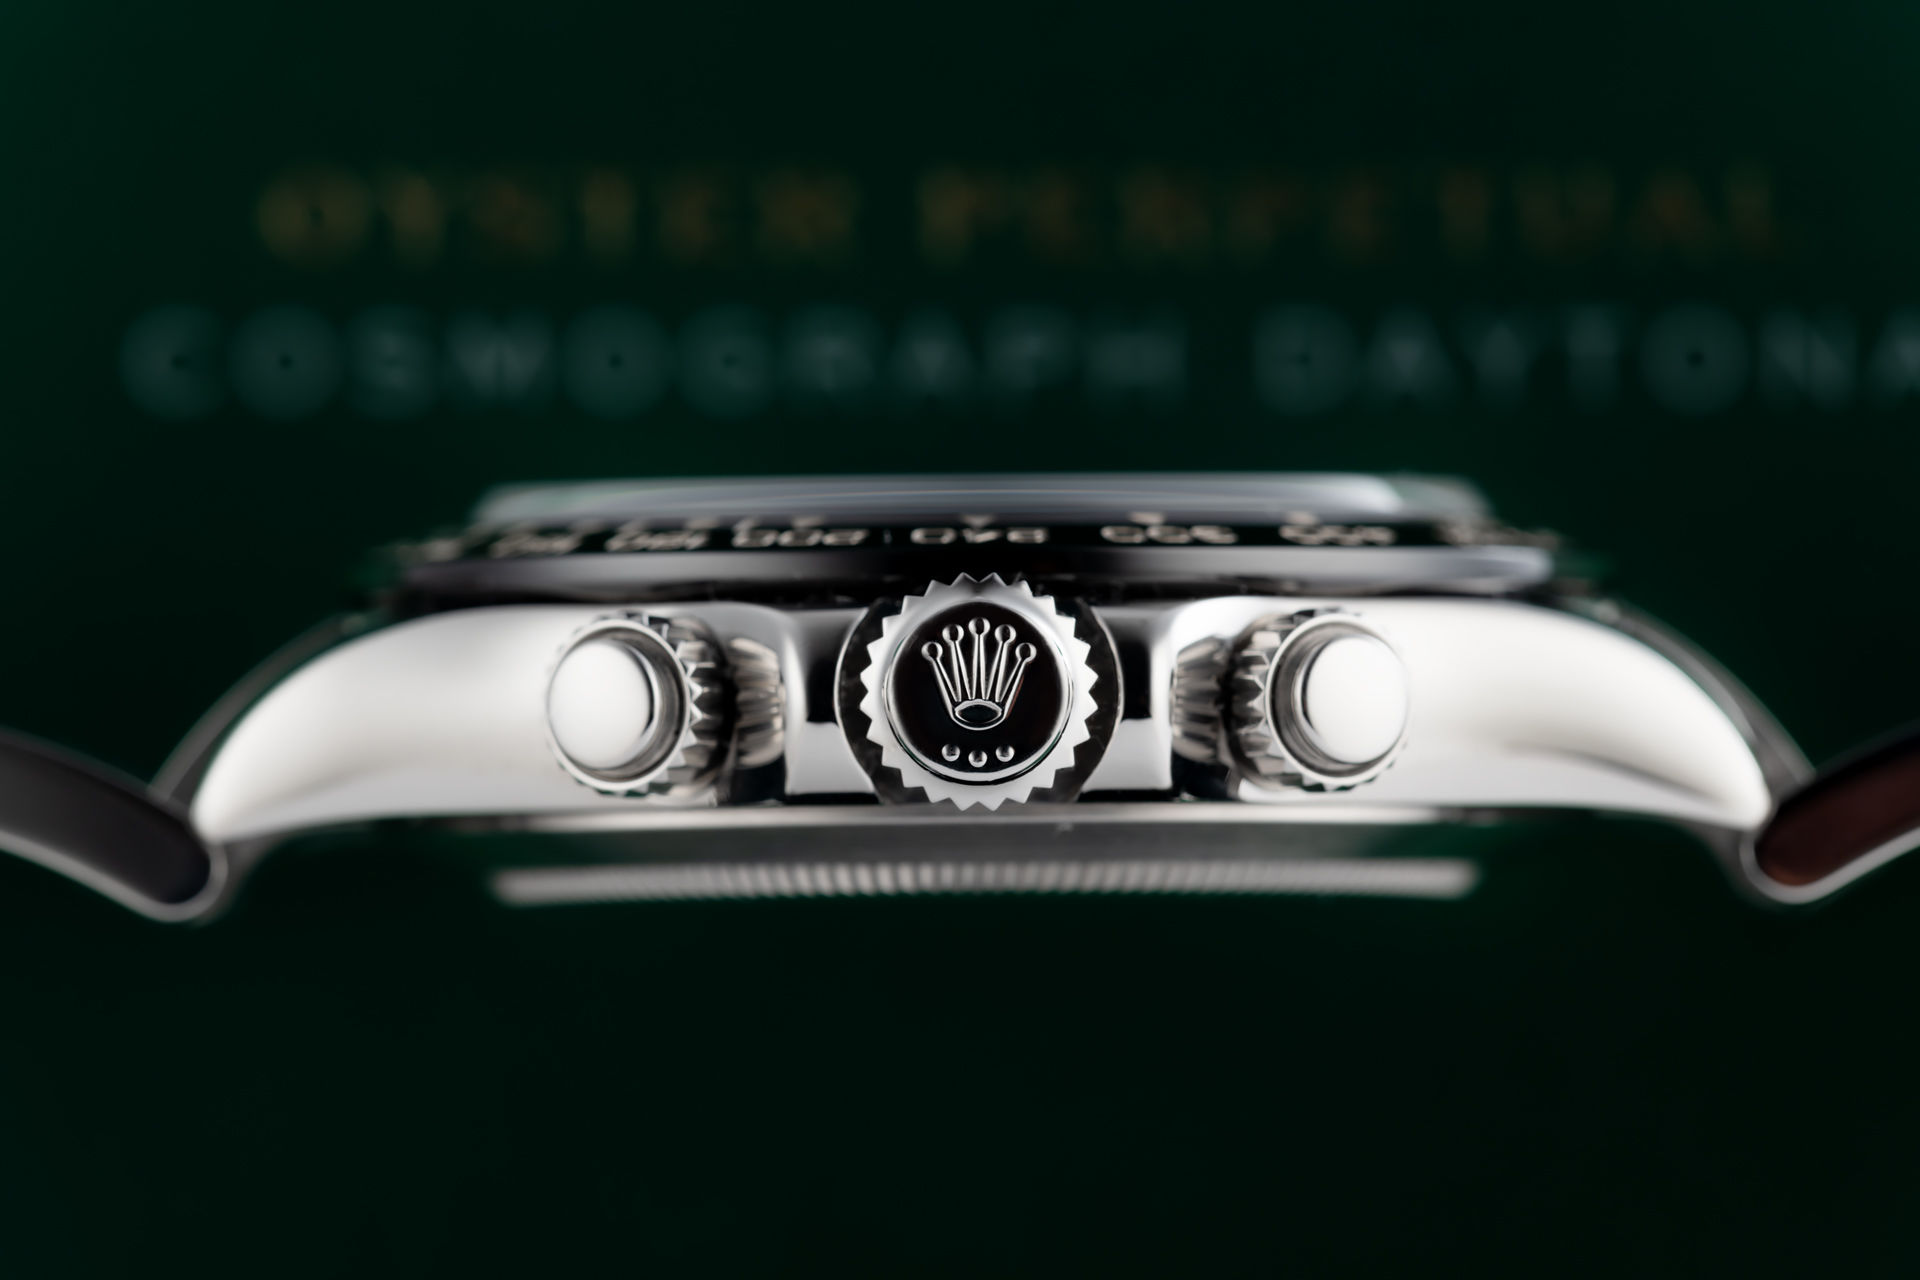 ref 116500LN | Rolex Warranty to 2022 | Rolex Cosmograph Daytona